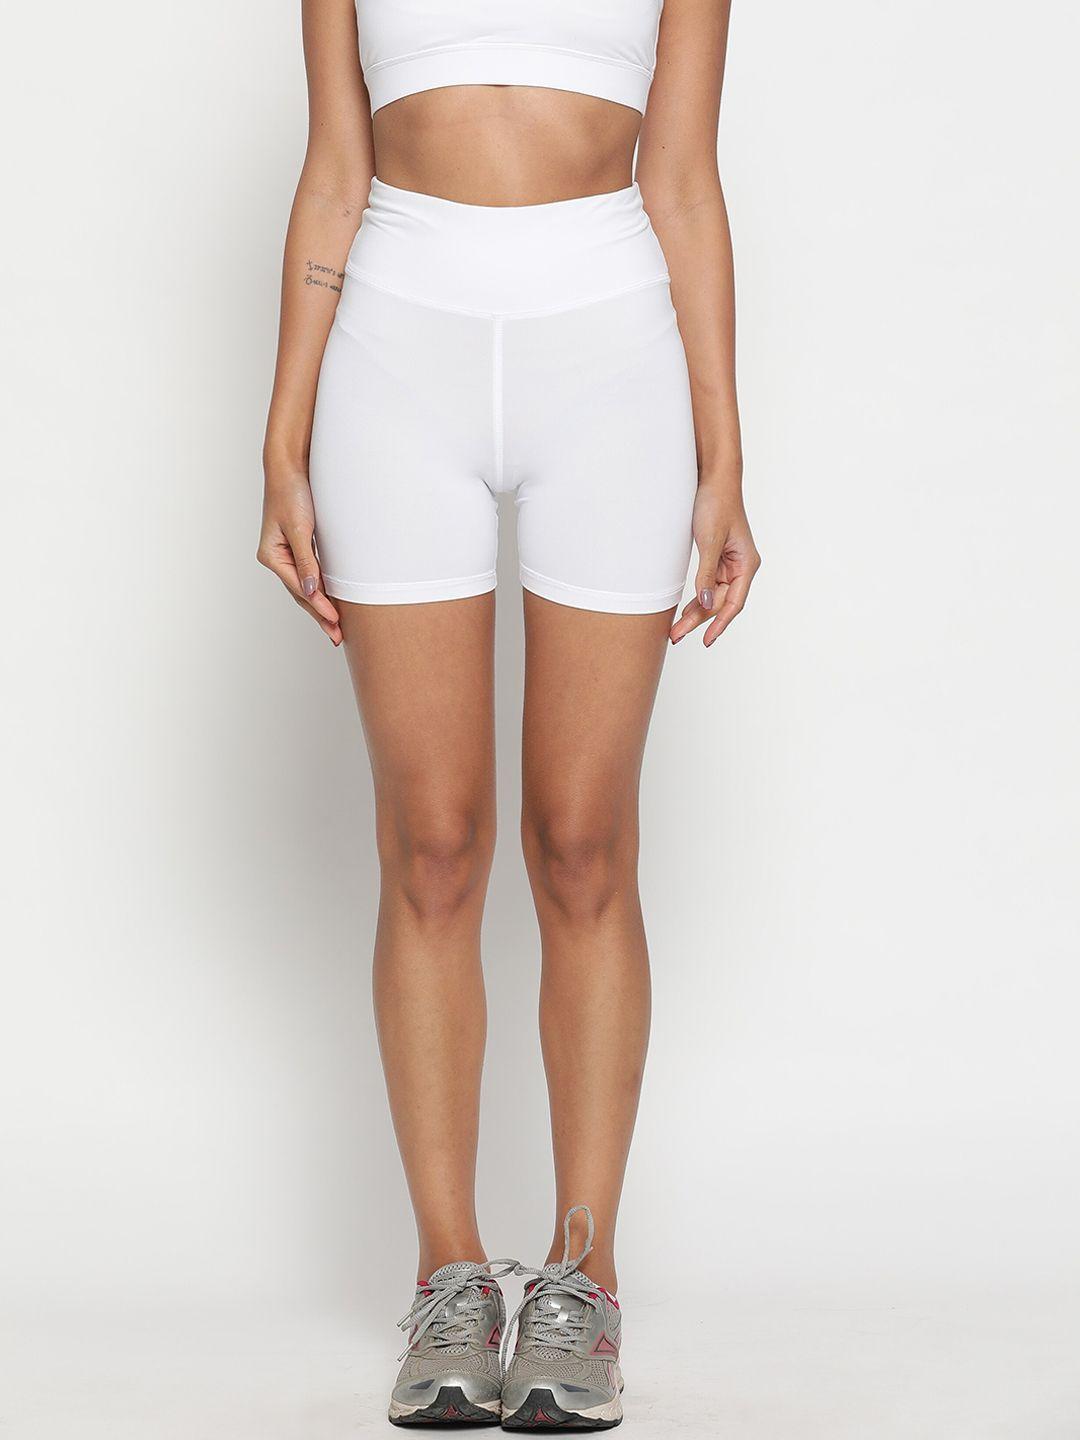 wearjukebox-women-white-slim-fit-high-rise-training-or-gym-shorts